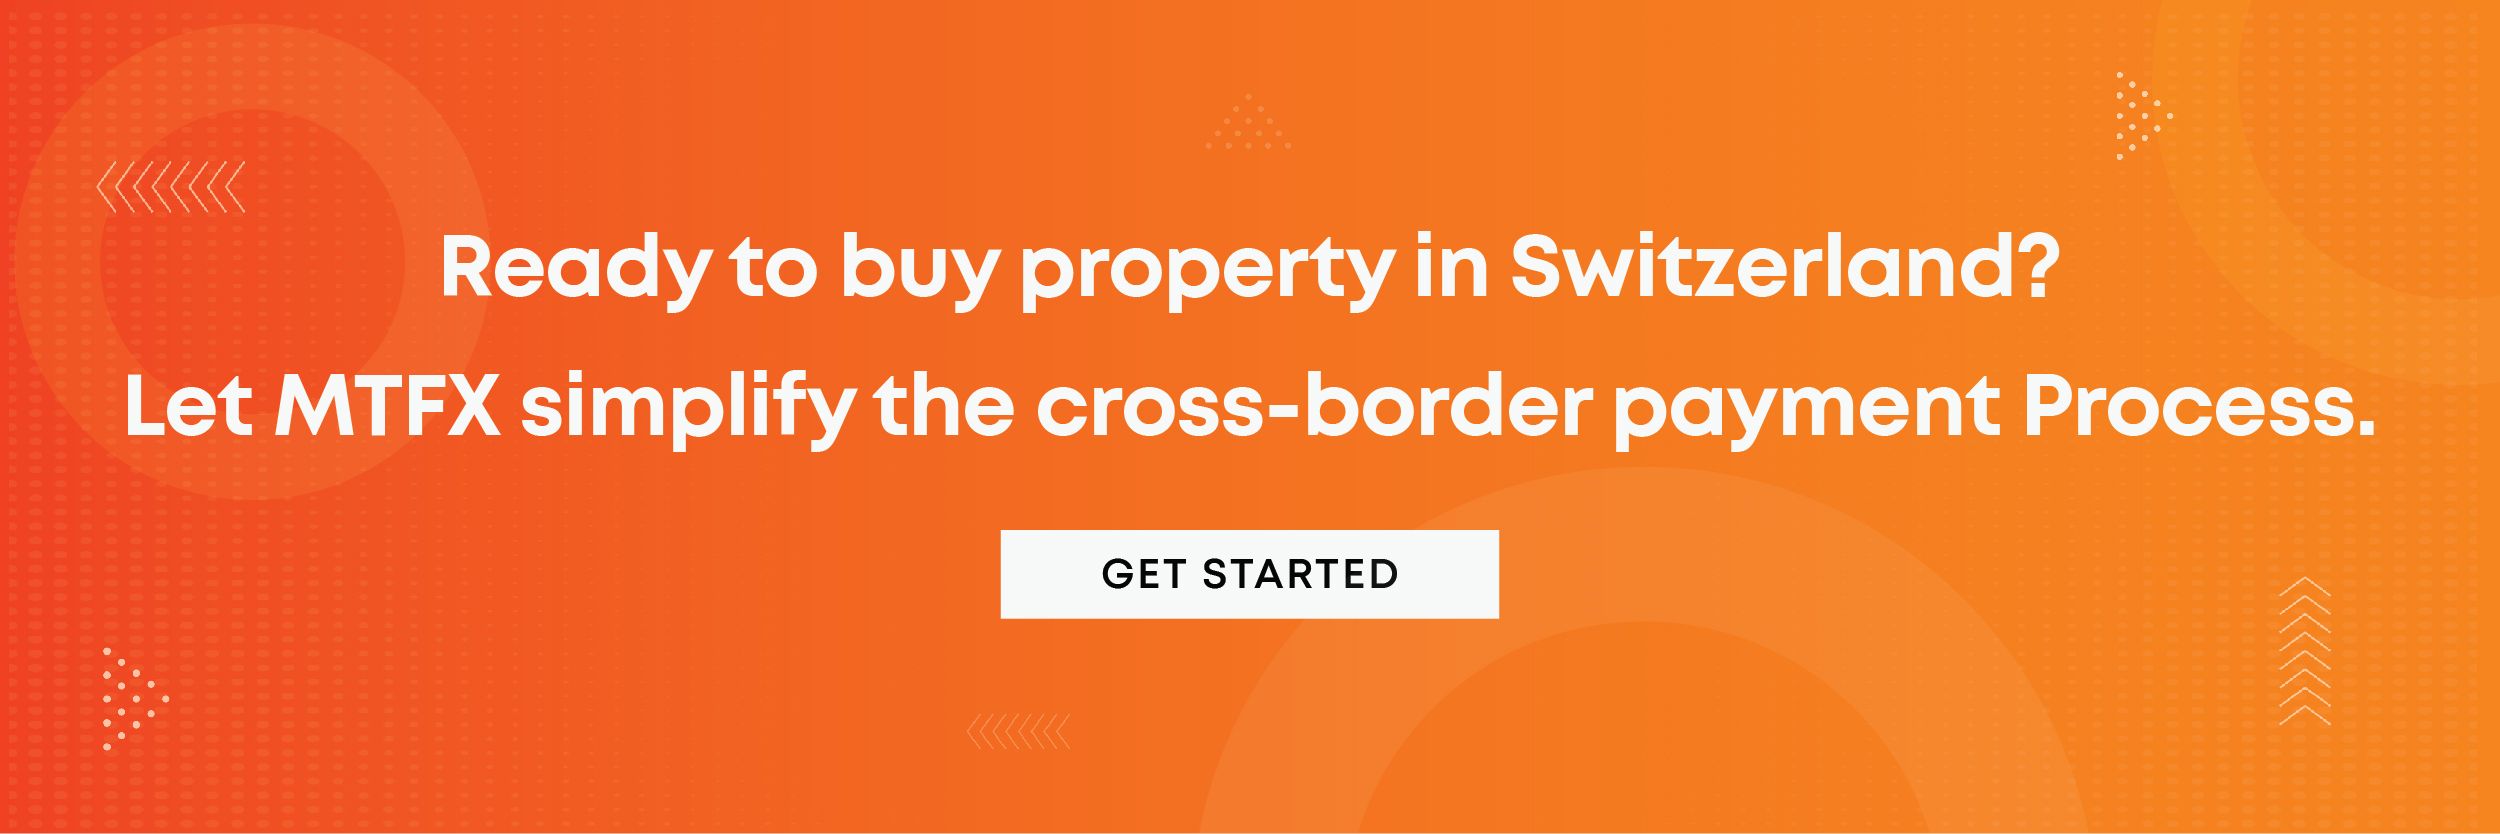 Ready to buy property in Switzerland?